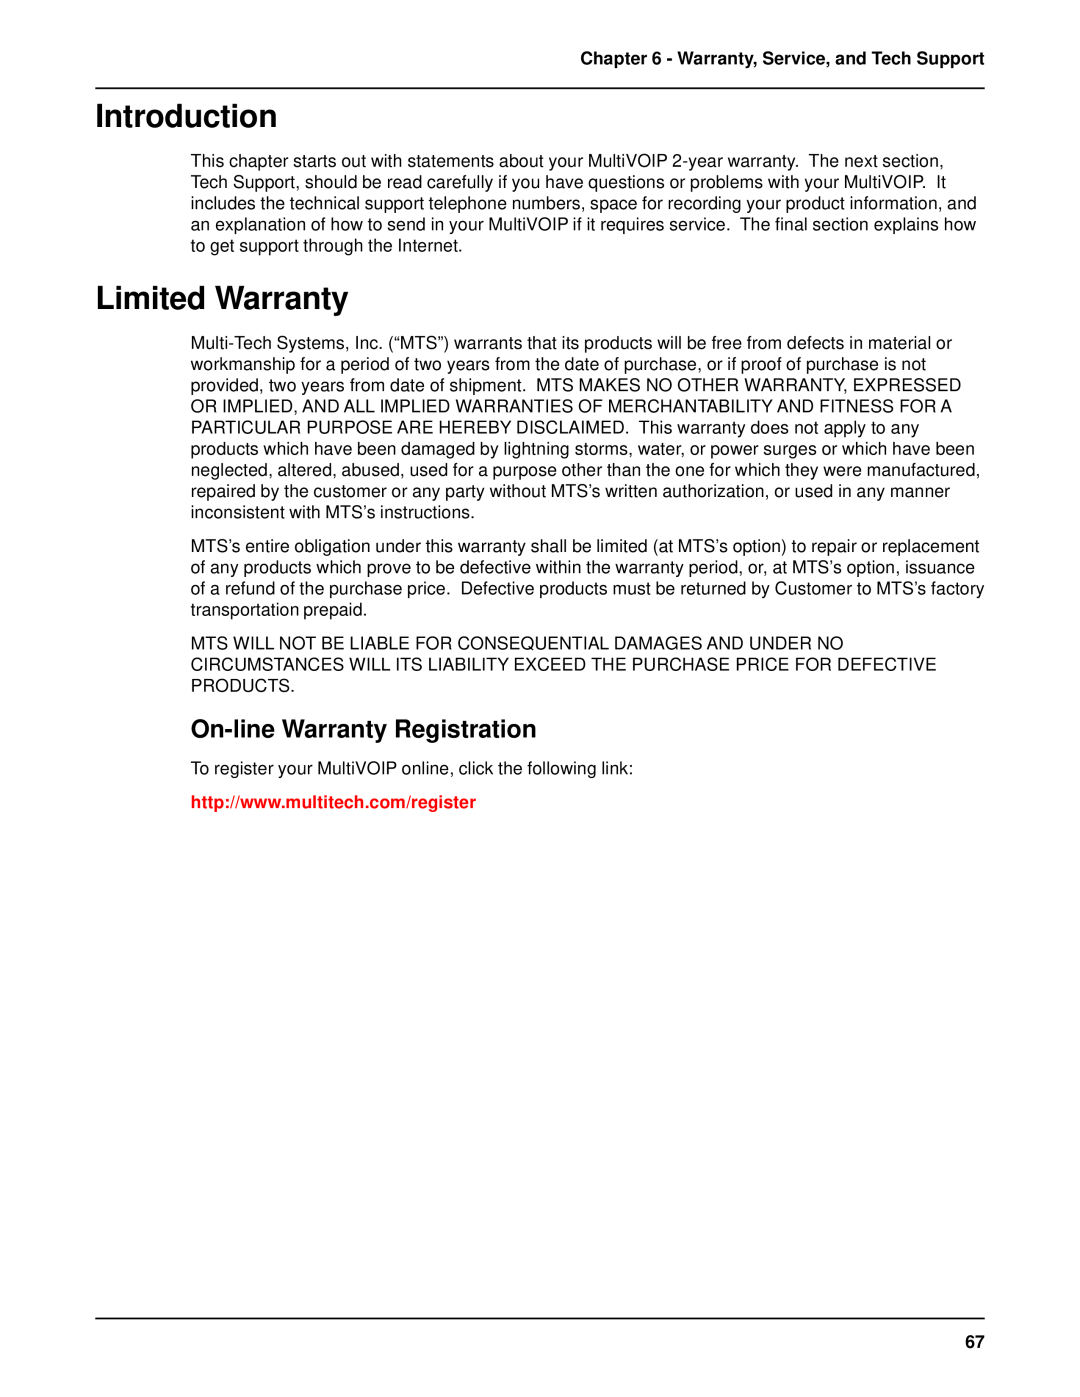 Multi-Tech Systems MVP 800 manual Limited Warranty, On-line Warranty Registration, Introduction 